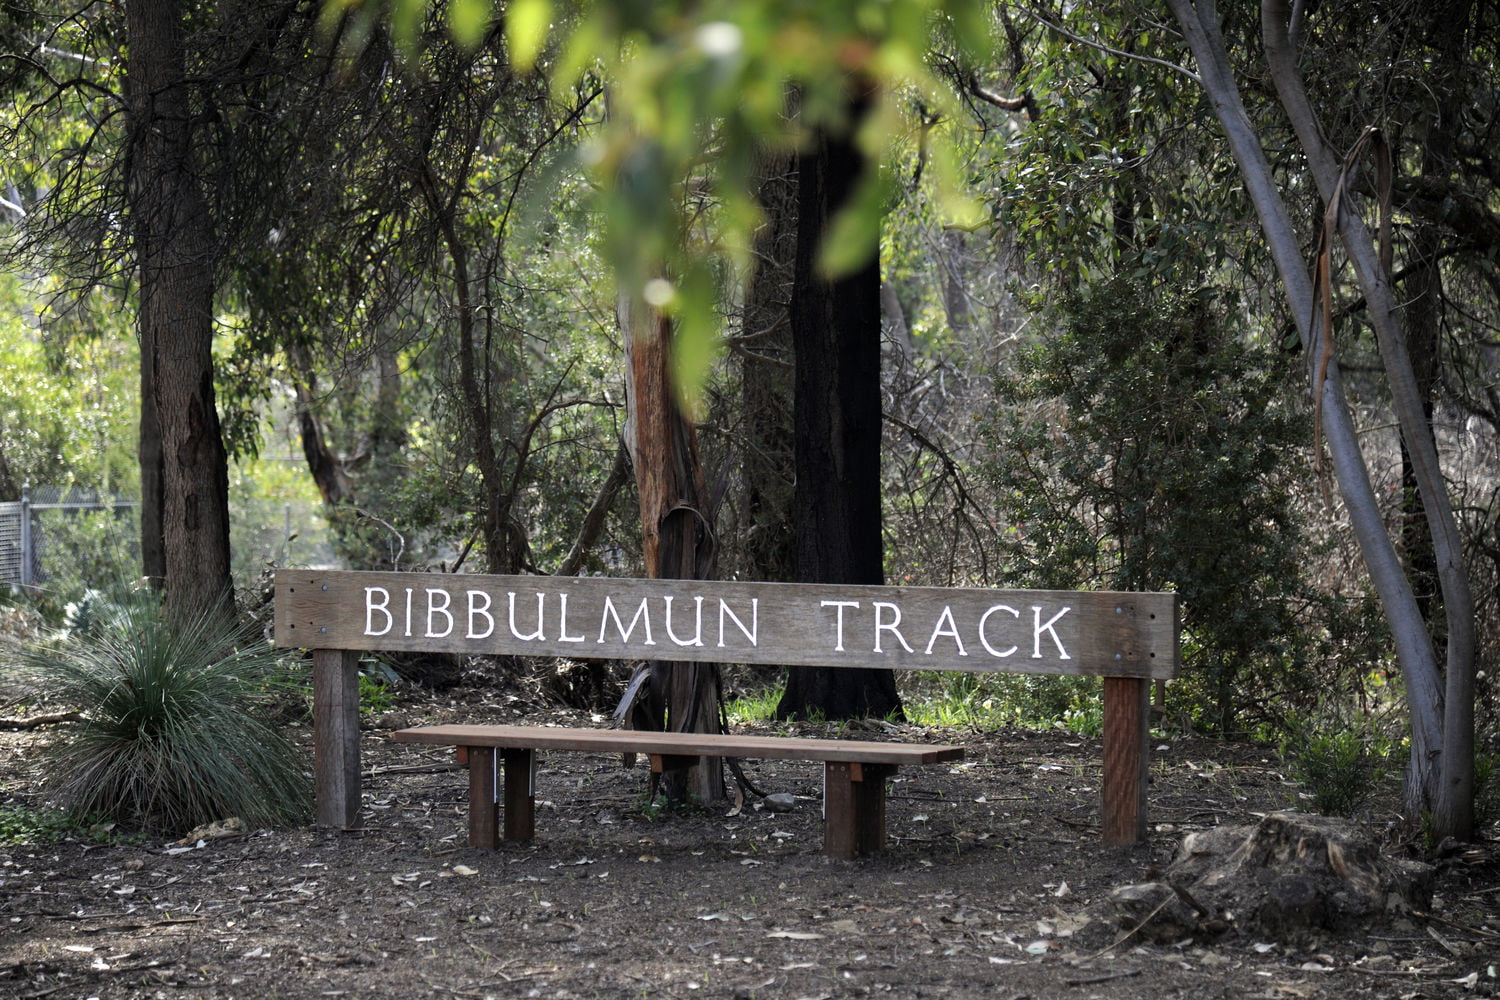 A rest point on the Bibbulmun Track